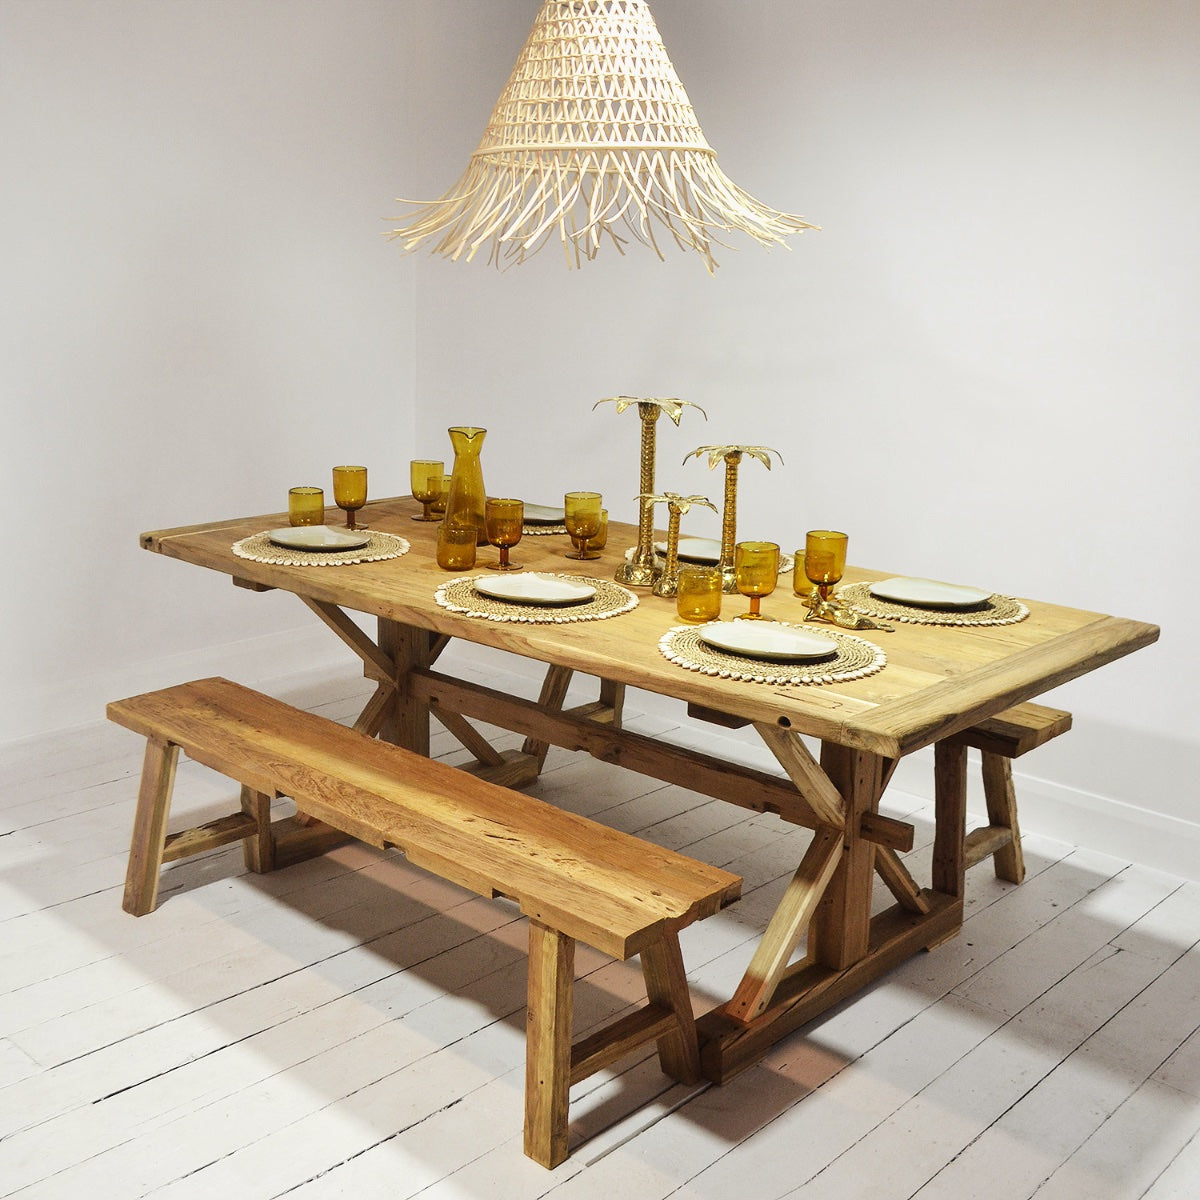 Teak Timber Cross Leg Dining Table 2m x 1m